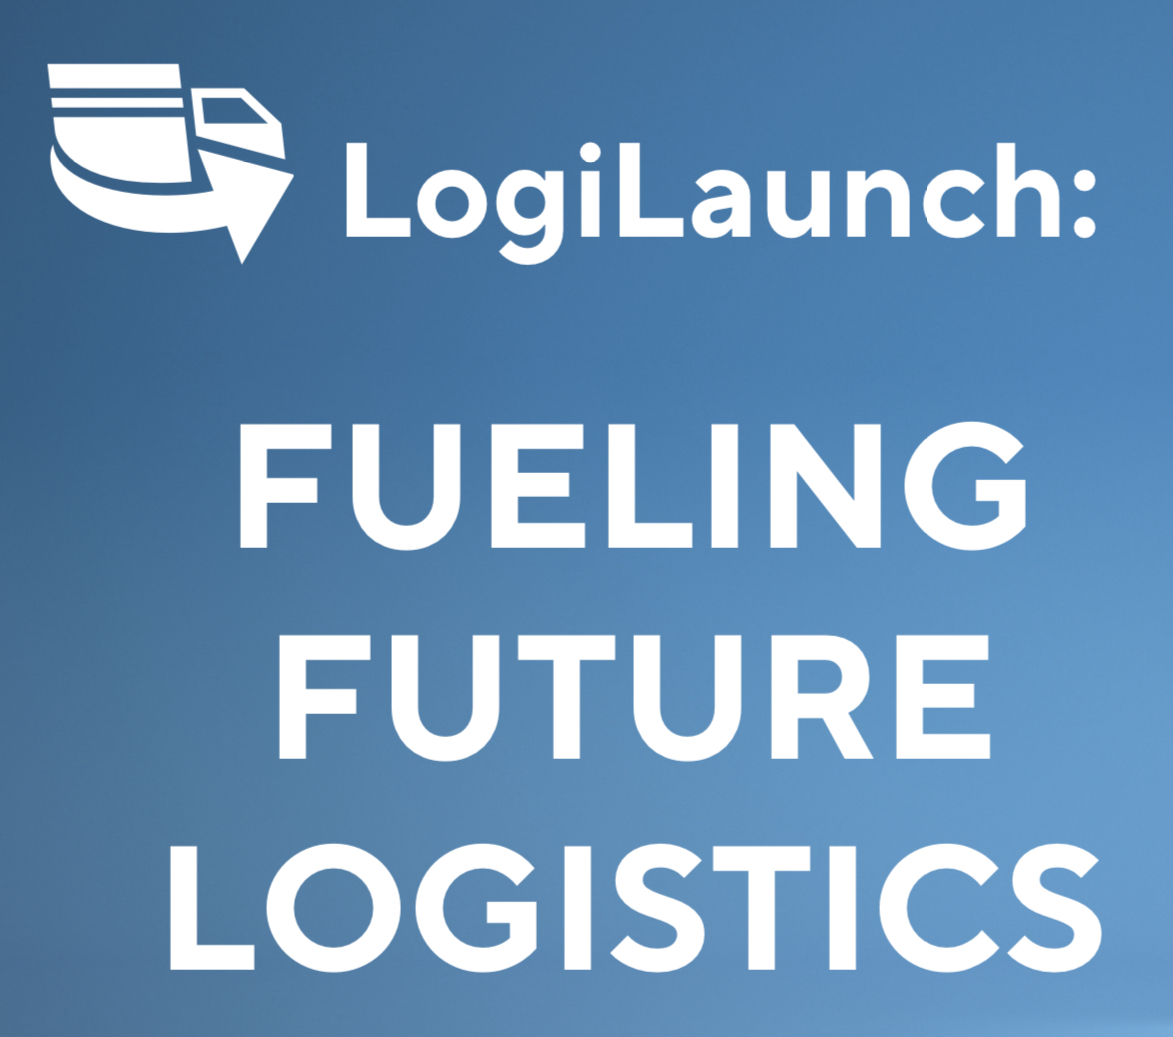 LogiLaunch Fueling Future Logistics flyer